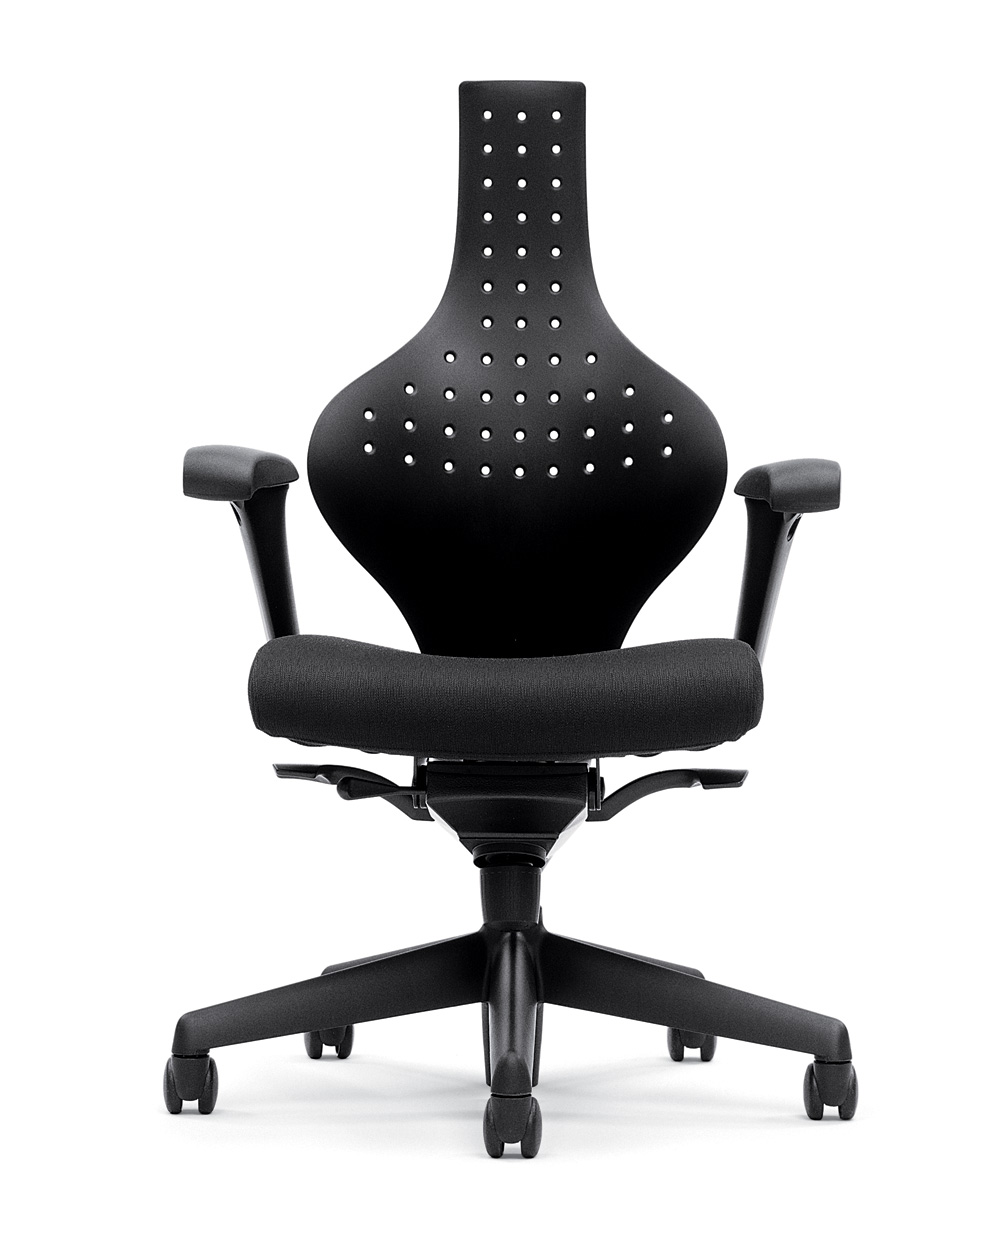 Junior-chair-8561-front.jpg